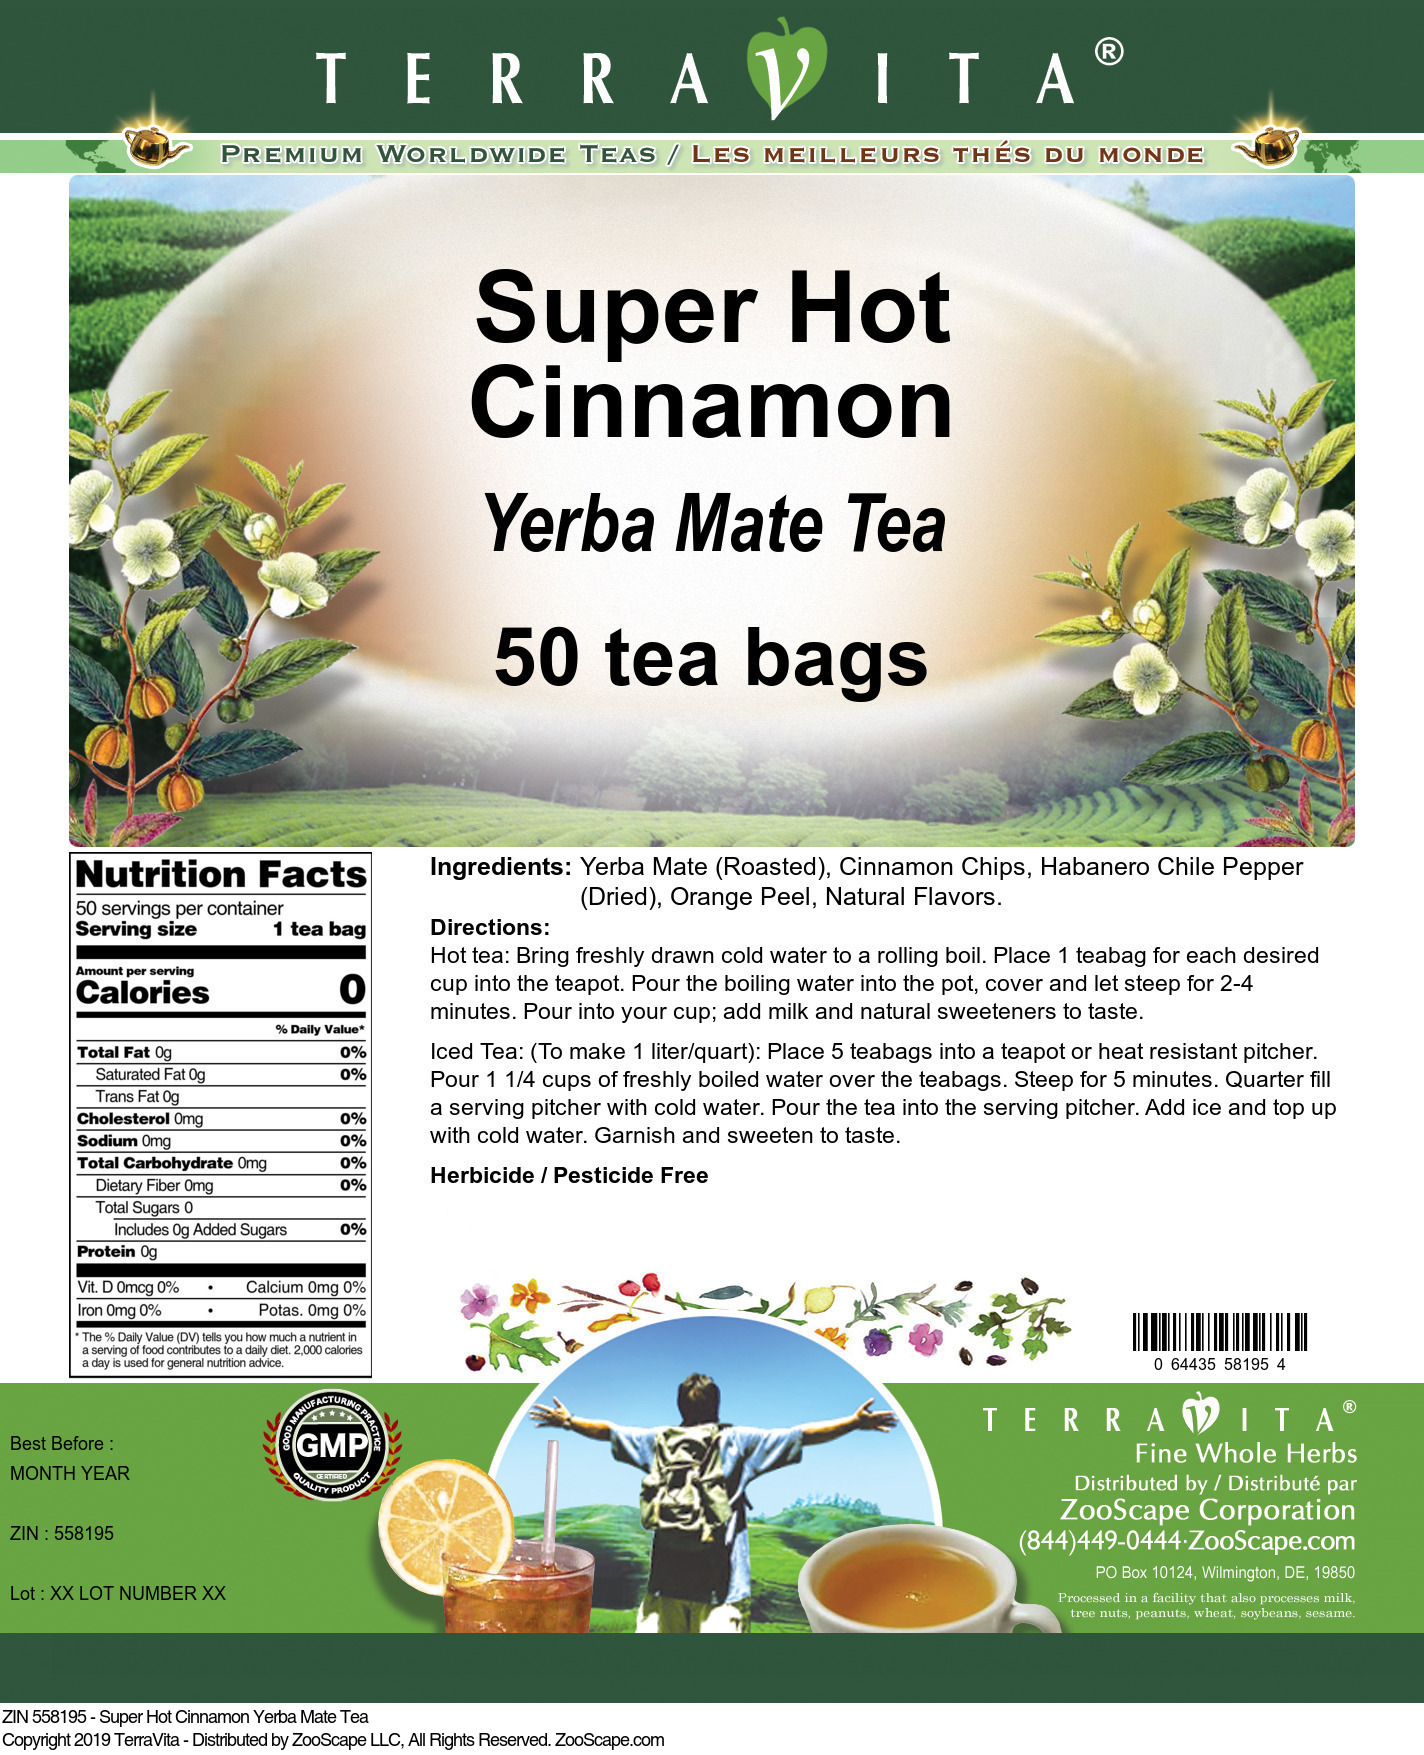 Super Hot Cinnamon Yerba Mate Tea - Label